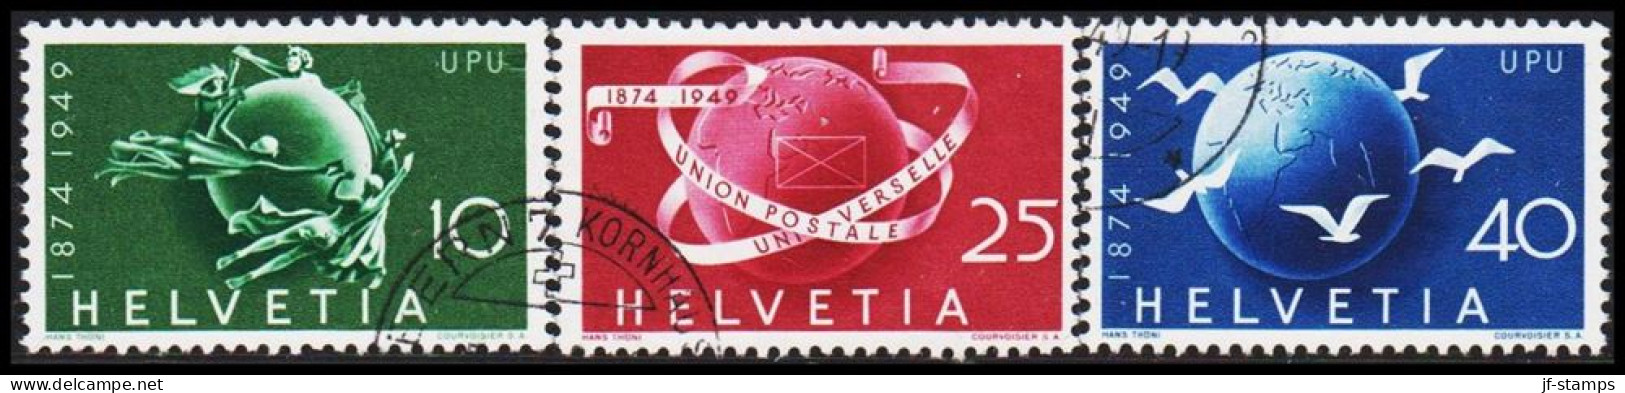 1949. HELVETIA - SCHWEIZ. UPU Complete Set.  - JF543968 - Oblitérés